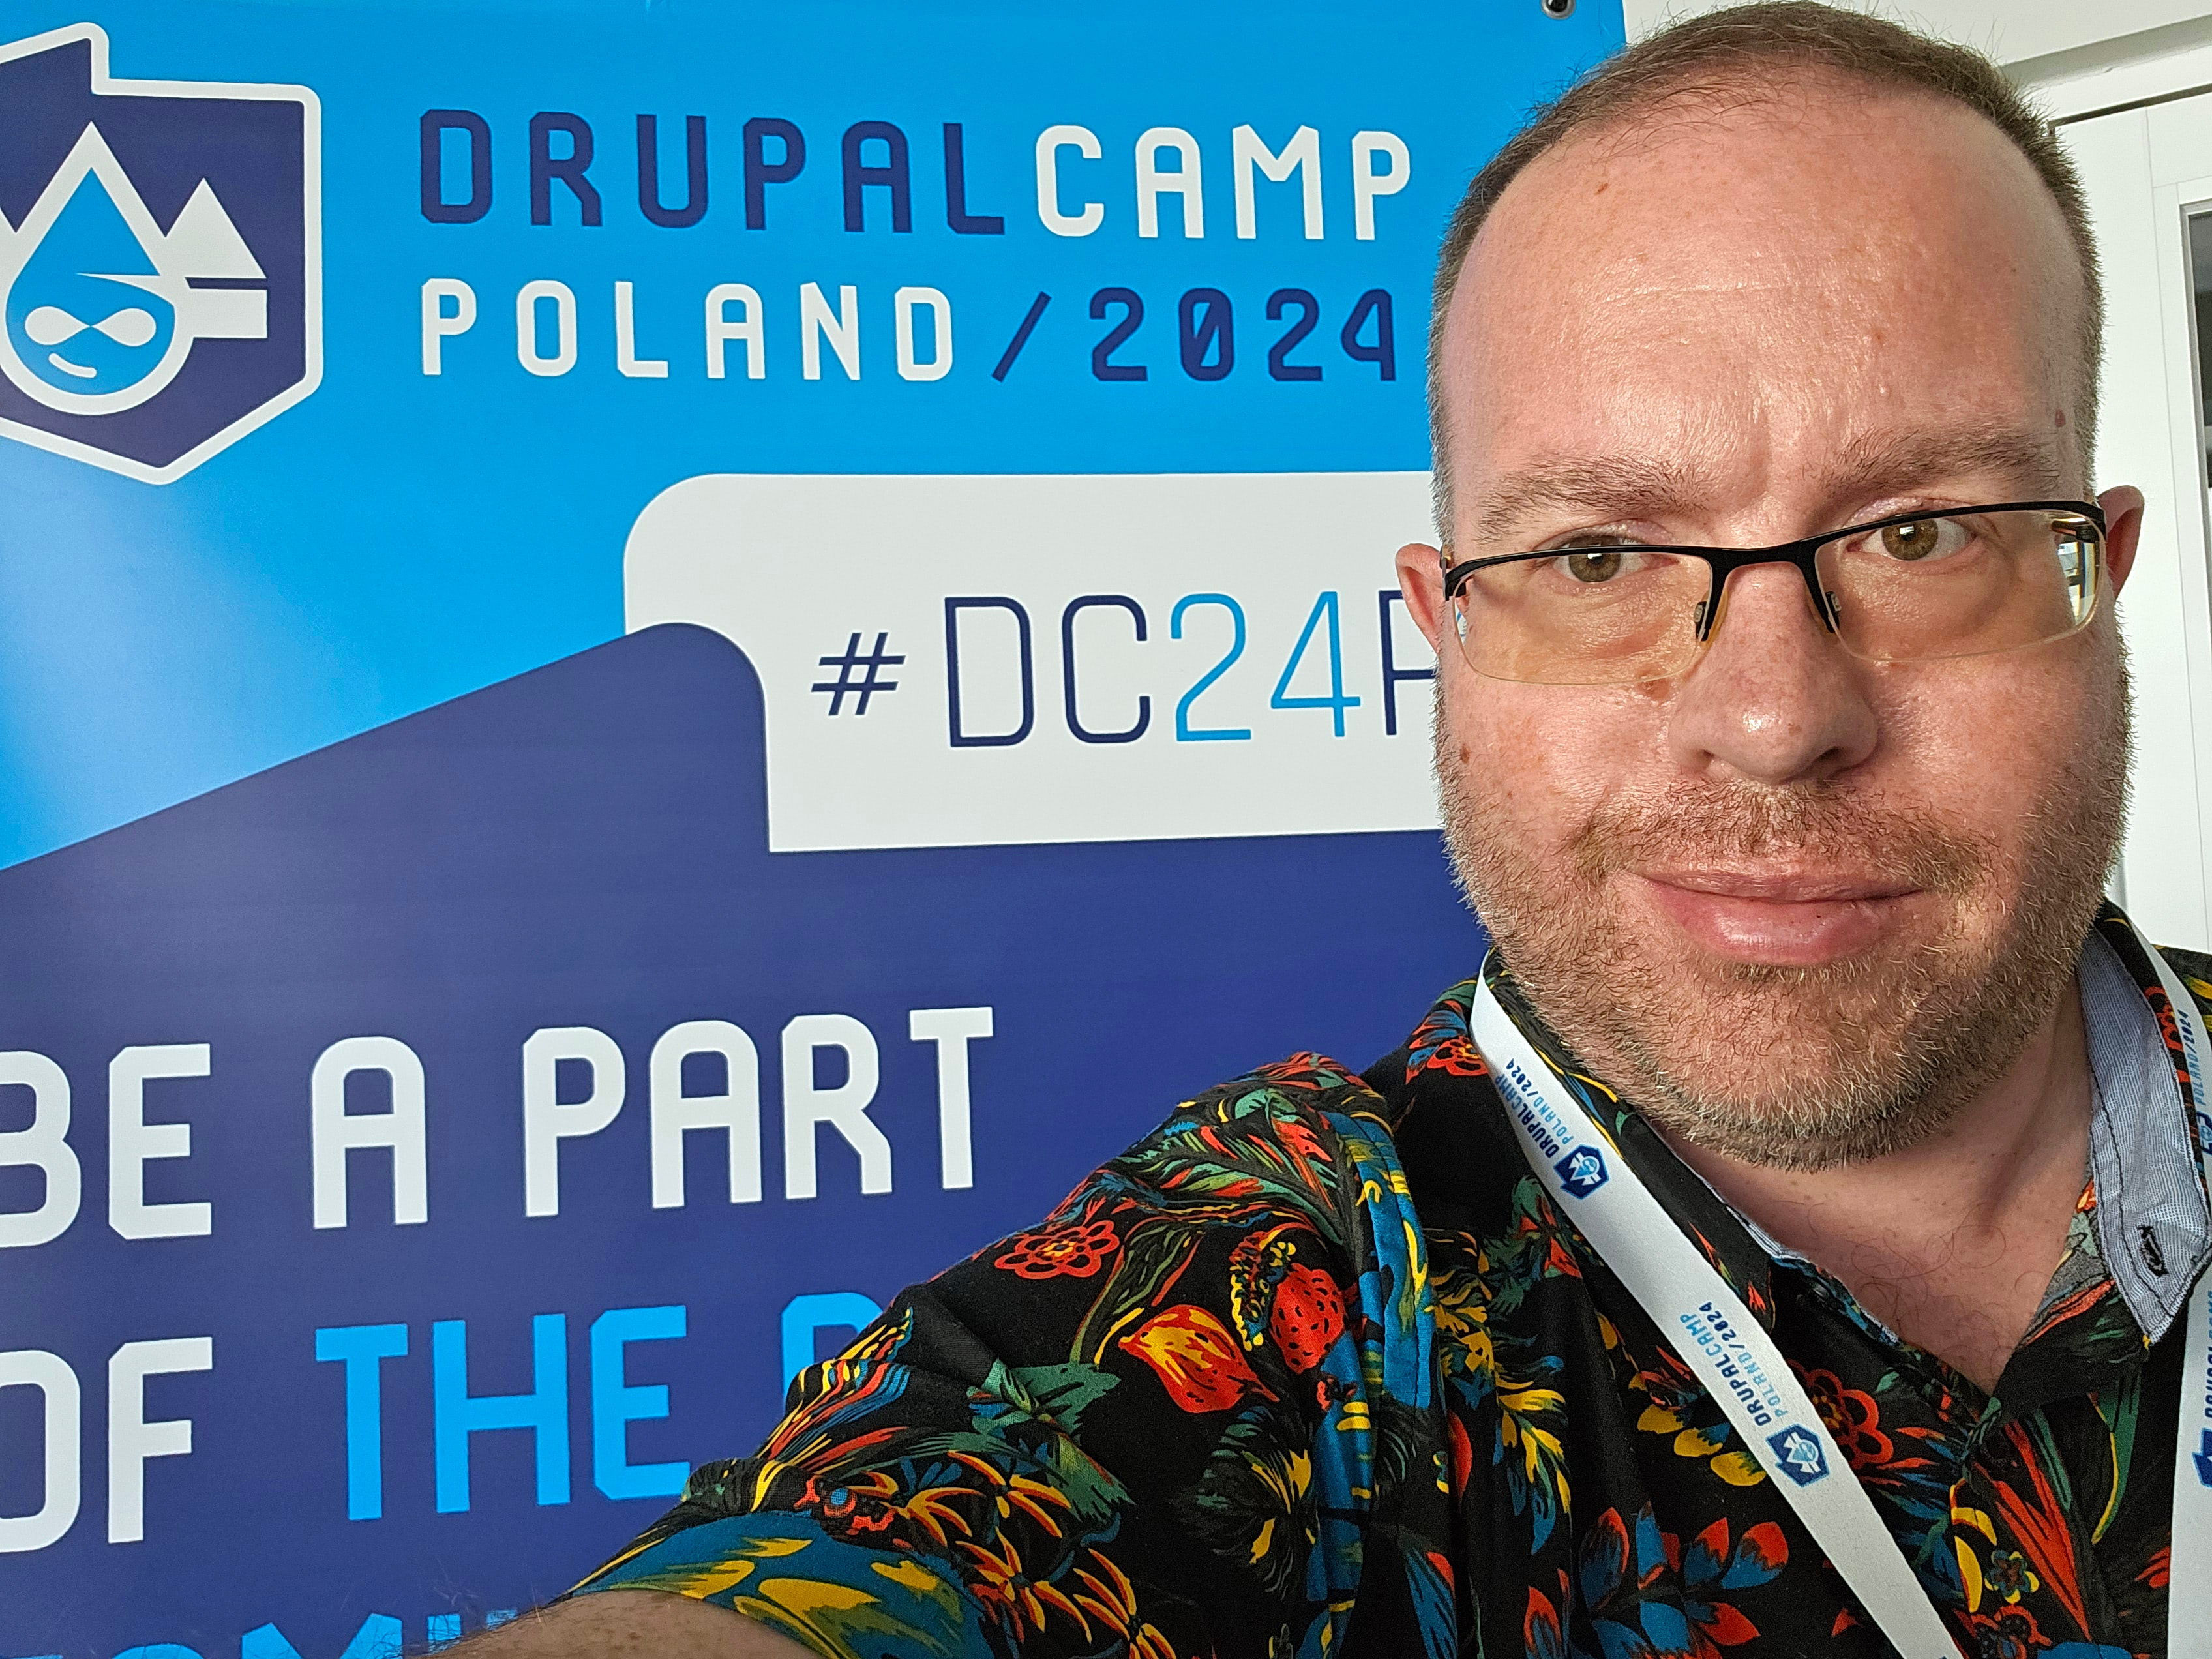 DrupalCamp Poland 2024, Jan Polzer